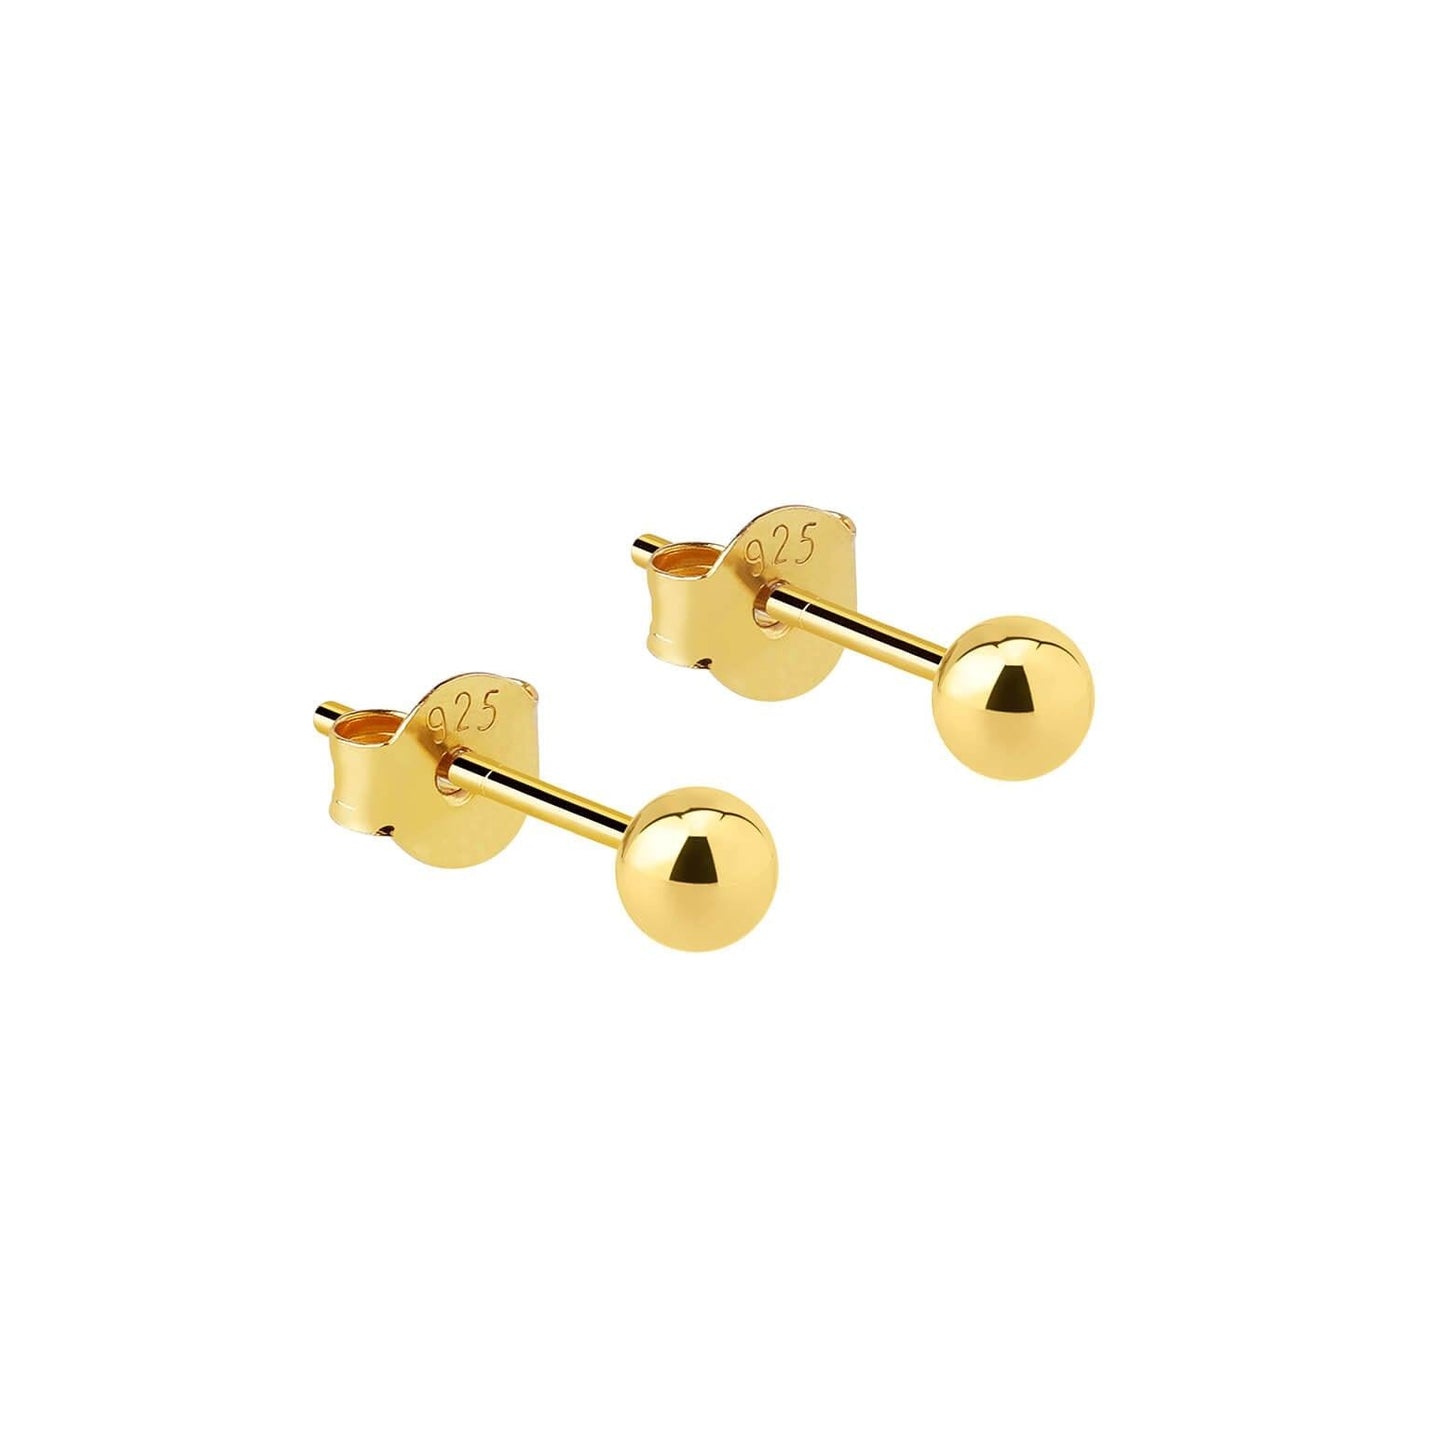 Baby Earrings | Gold earrings for kids, Baby earrings, Small gold hoop  earrings